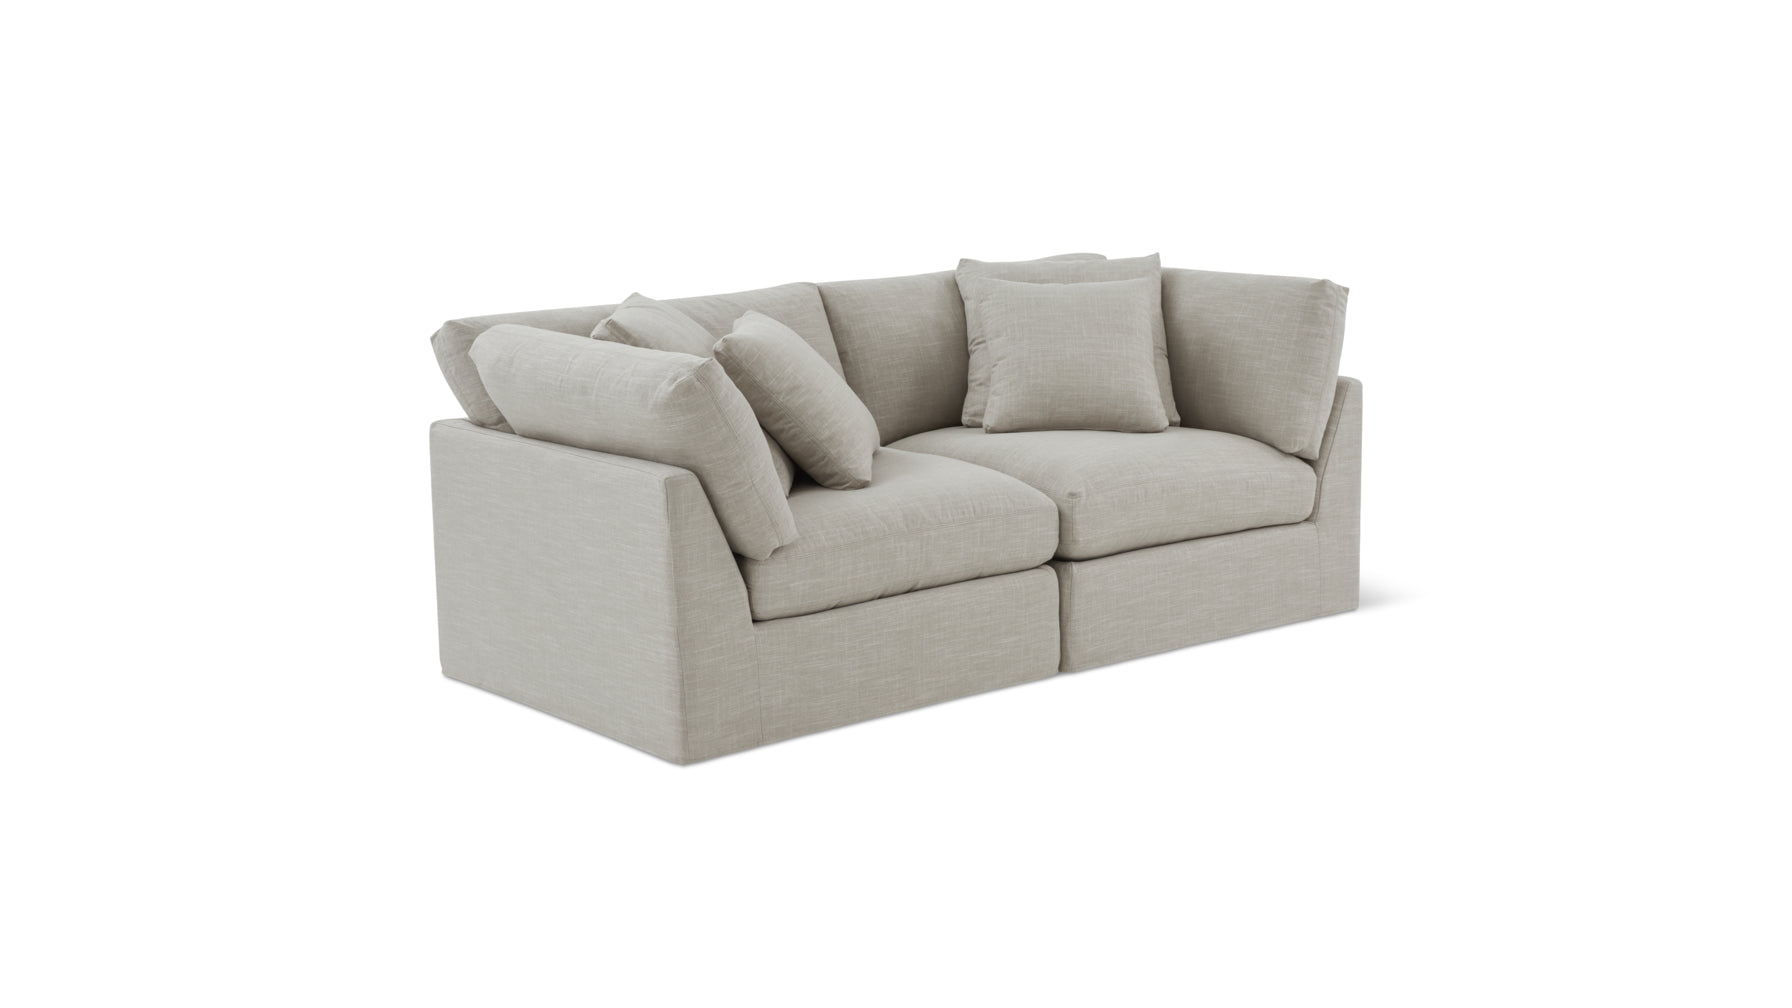 Get Together™ 2-Piece Modular Sofa, Large, Light Pebble - Image 2